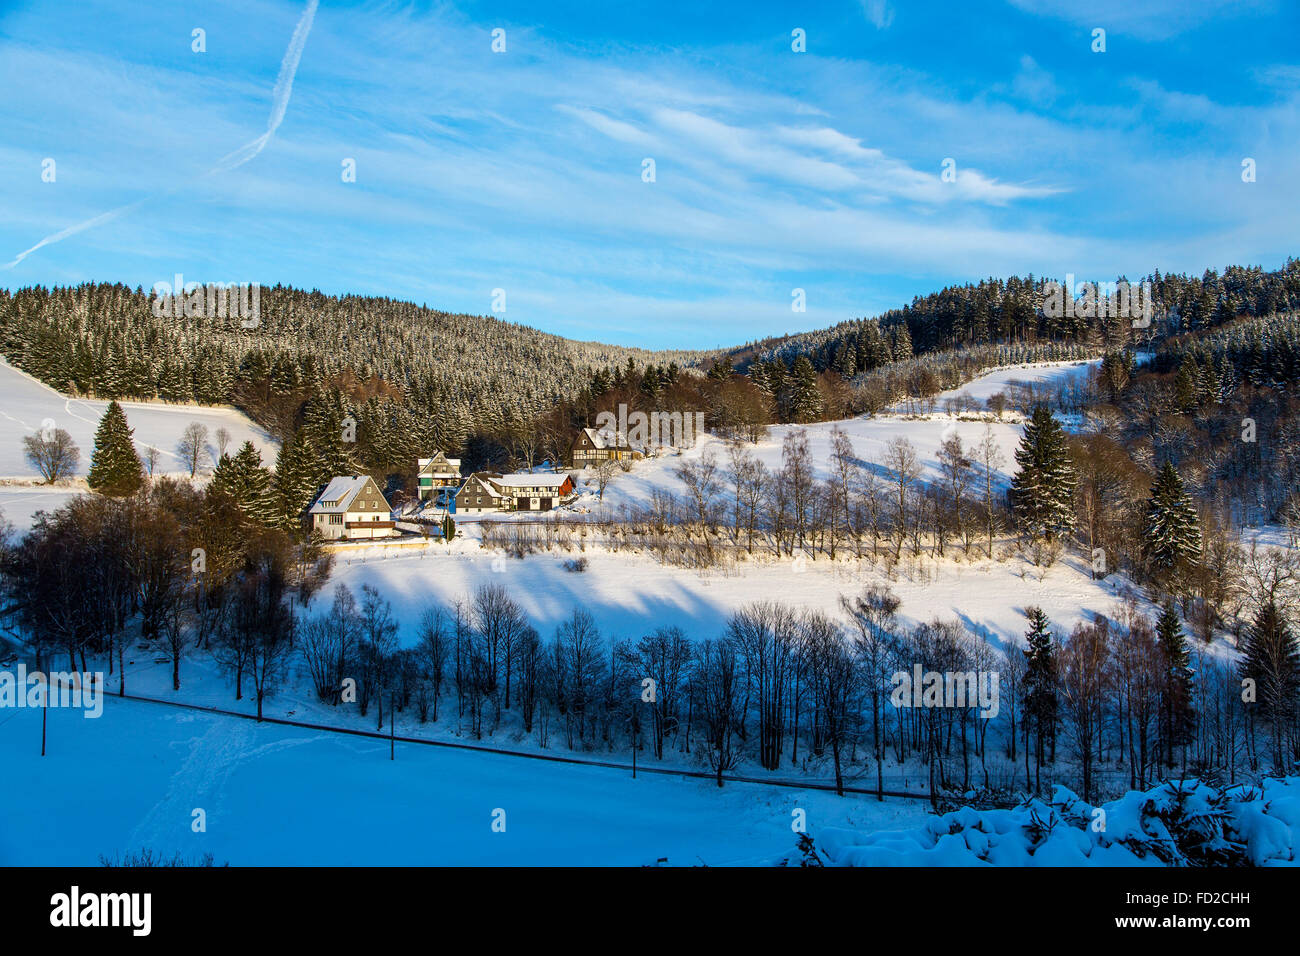 Winter, snowy landscape, village Nordenau in the Sauerland area, Germany, Stock Photo